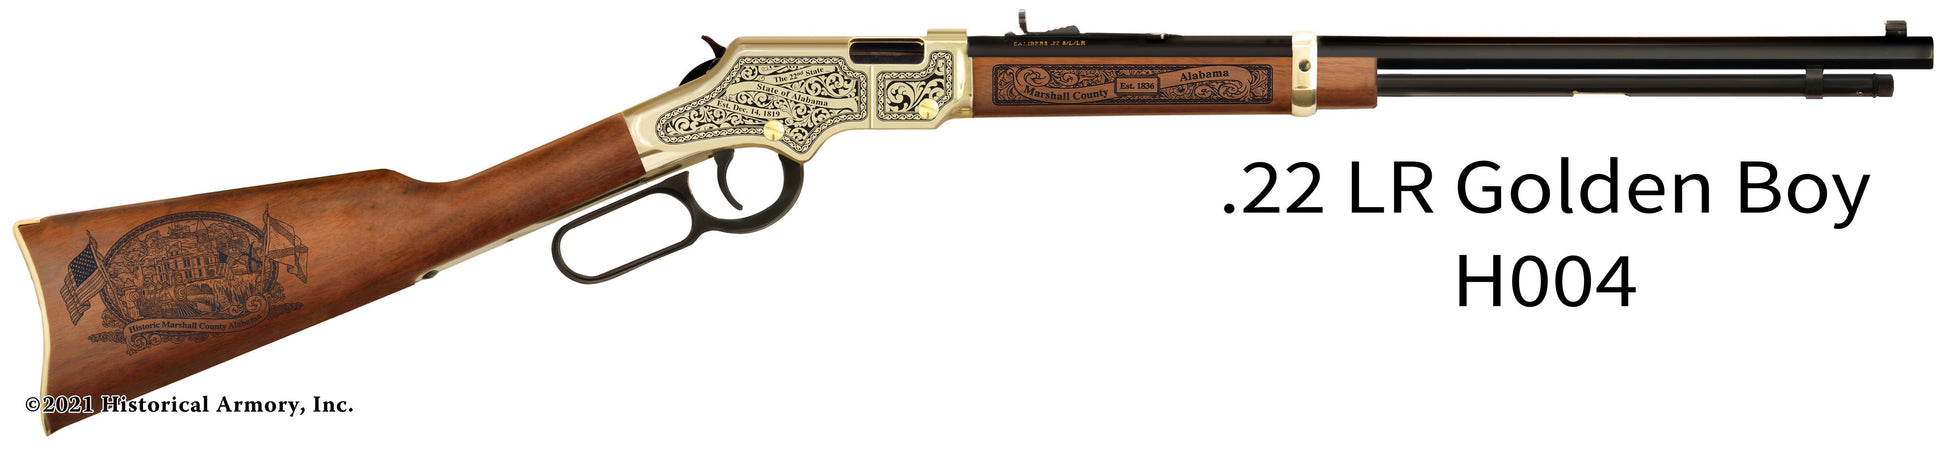 Marshall County Alabama History Engraved  Rifle Henry Golden Boy .22 | Historical Armory